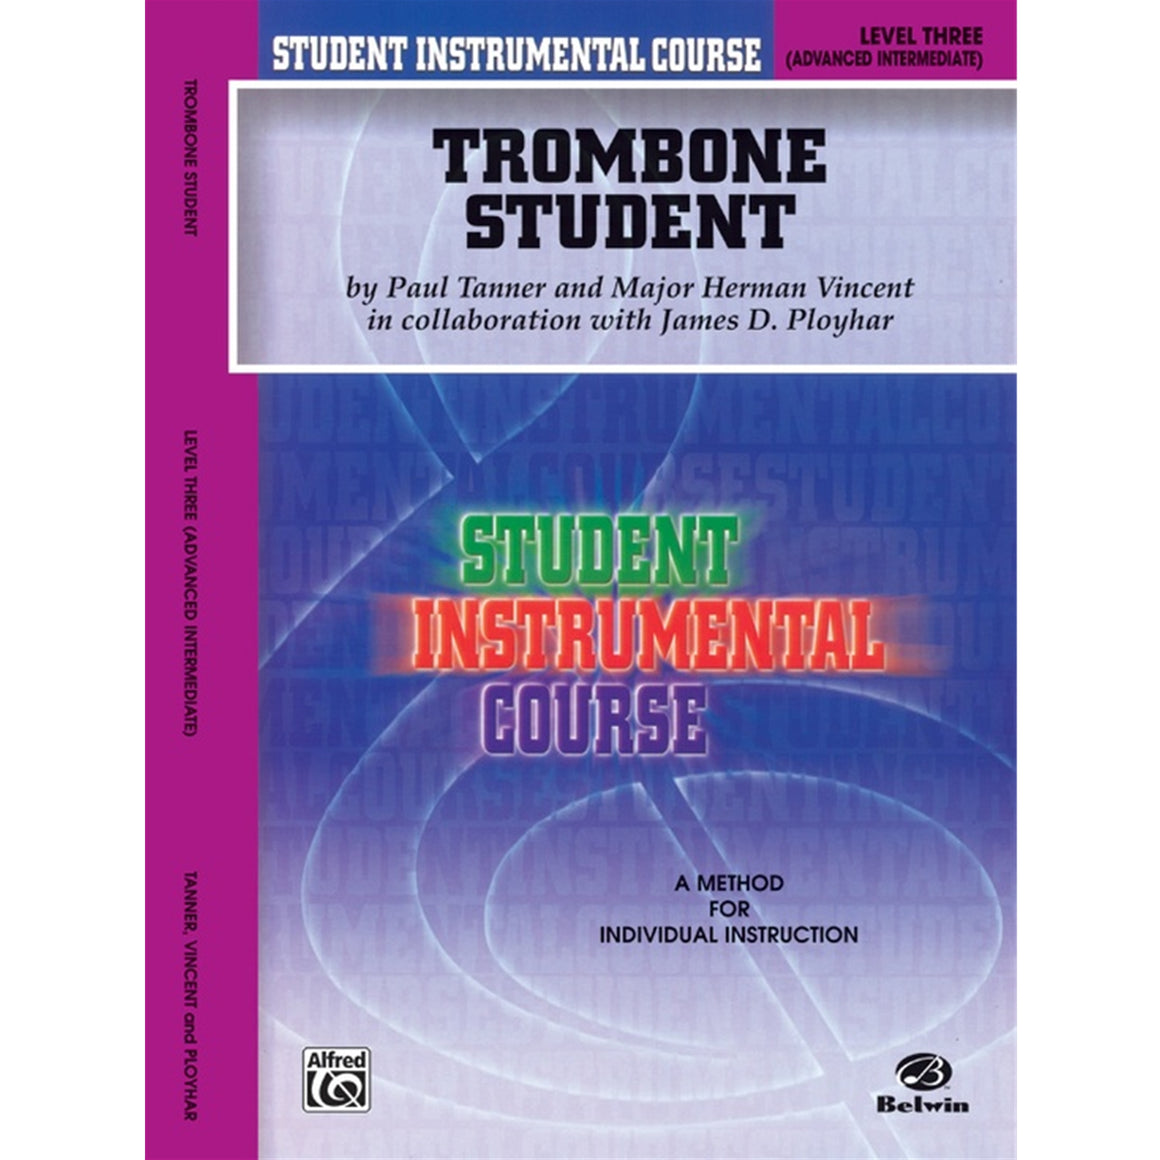 ALFRED 00BIC00356A Student Instrumental Course: Trombone Student, Level III [Trombone]